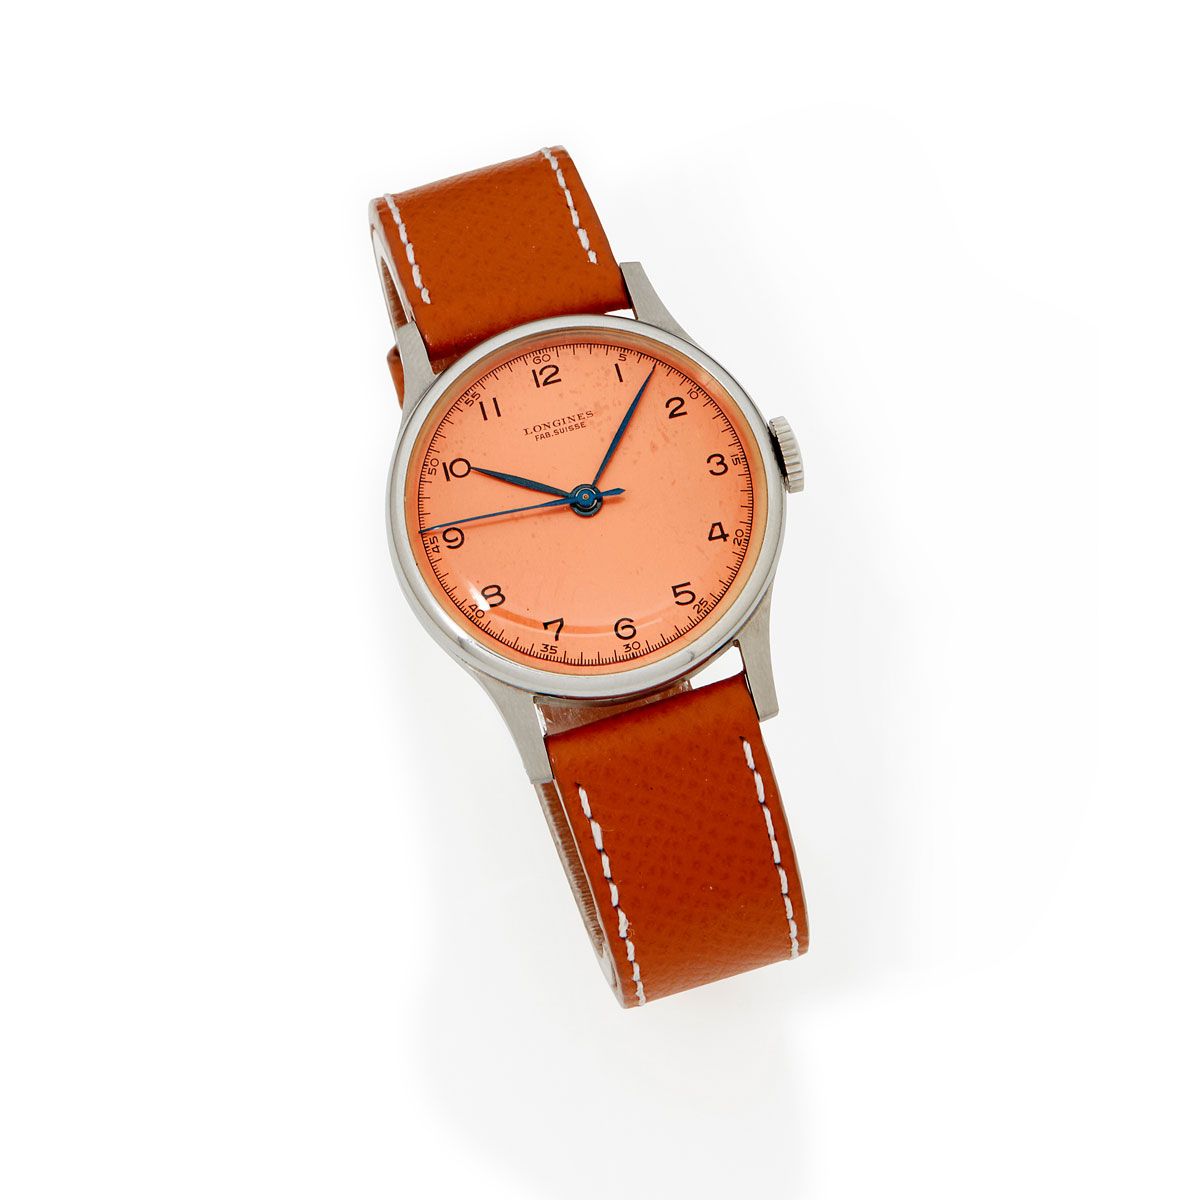 Null Longines, n° 23014, vers 1940.

Une belle montre classique en acier, cadran&hellip;